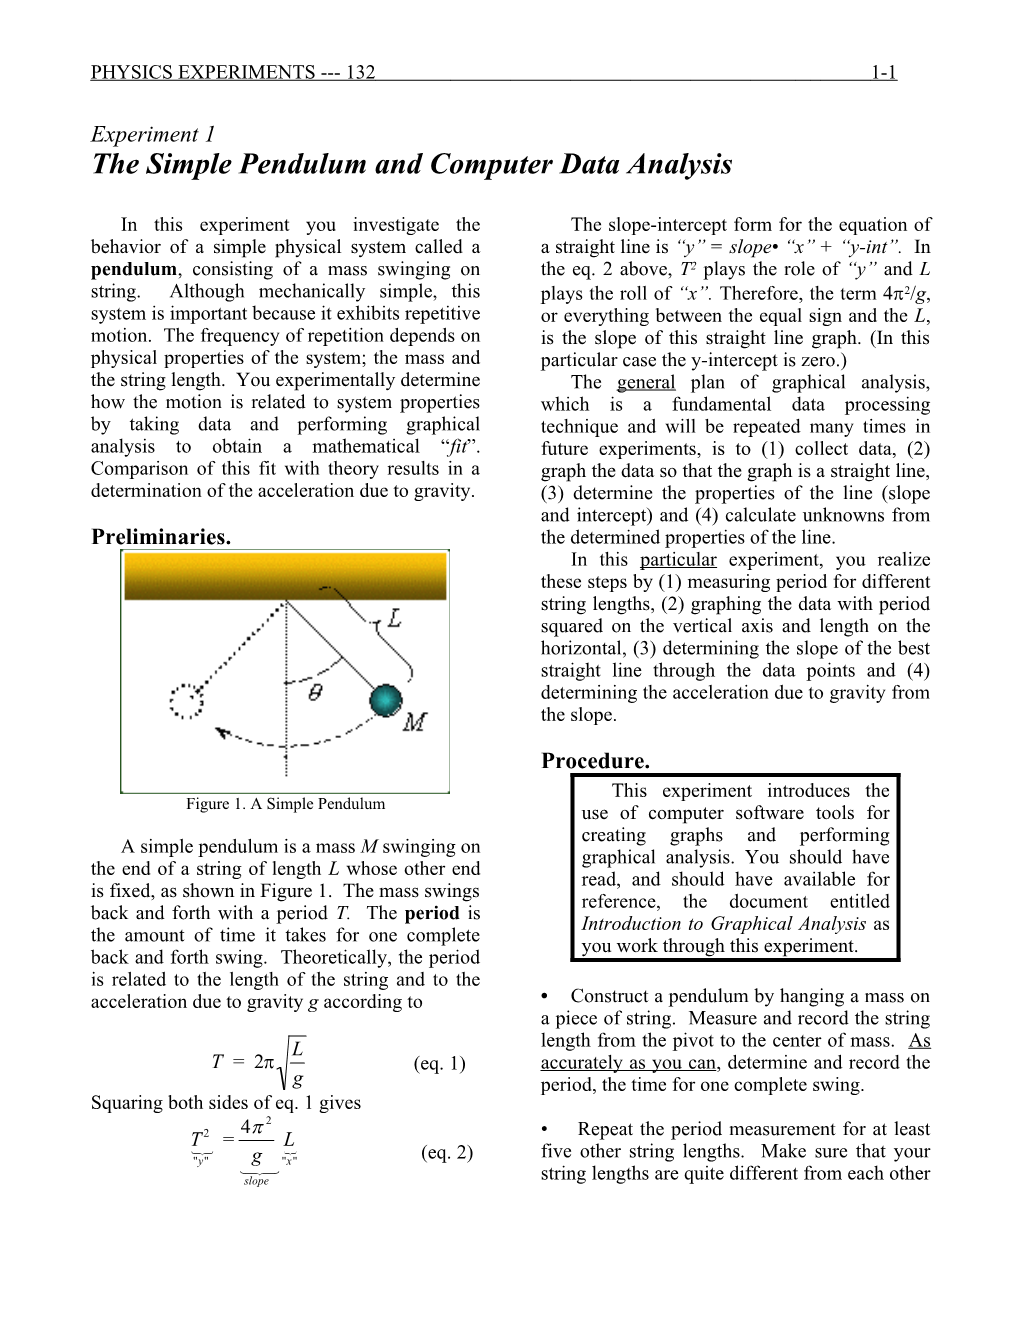 The Simple Pendulum and Computer Data Analysis